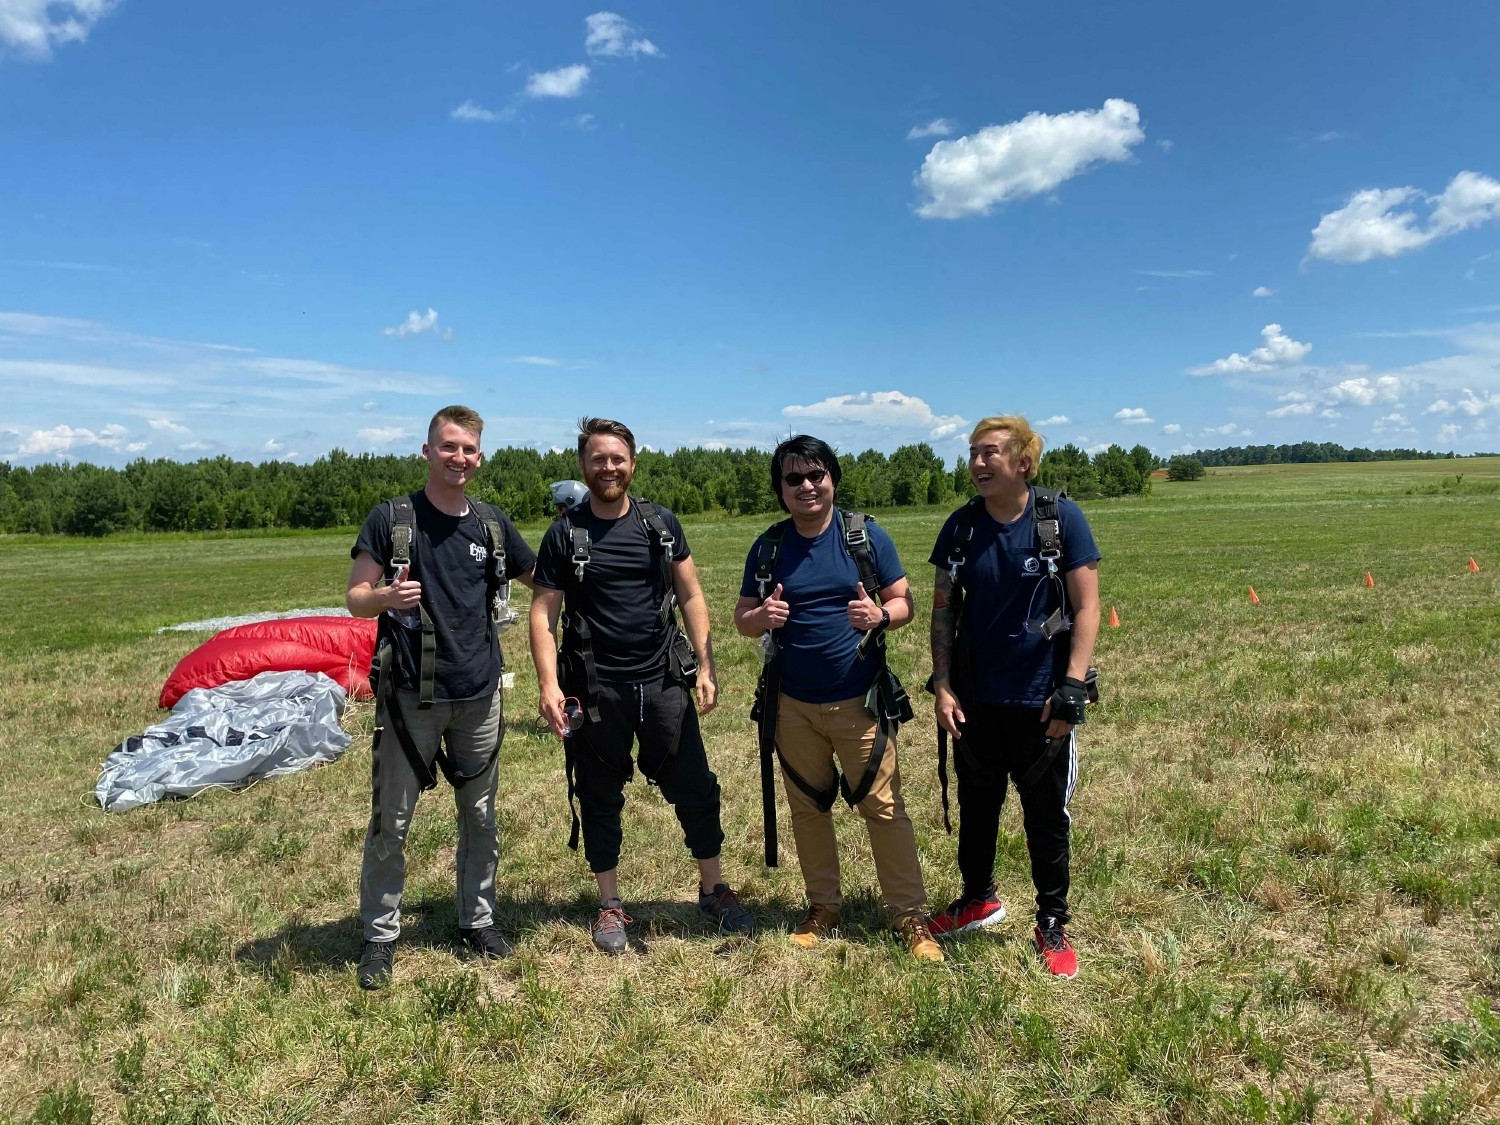 Some team members post-skydiving!